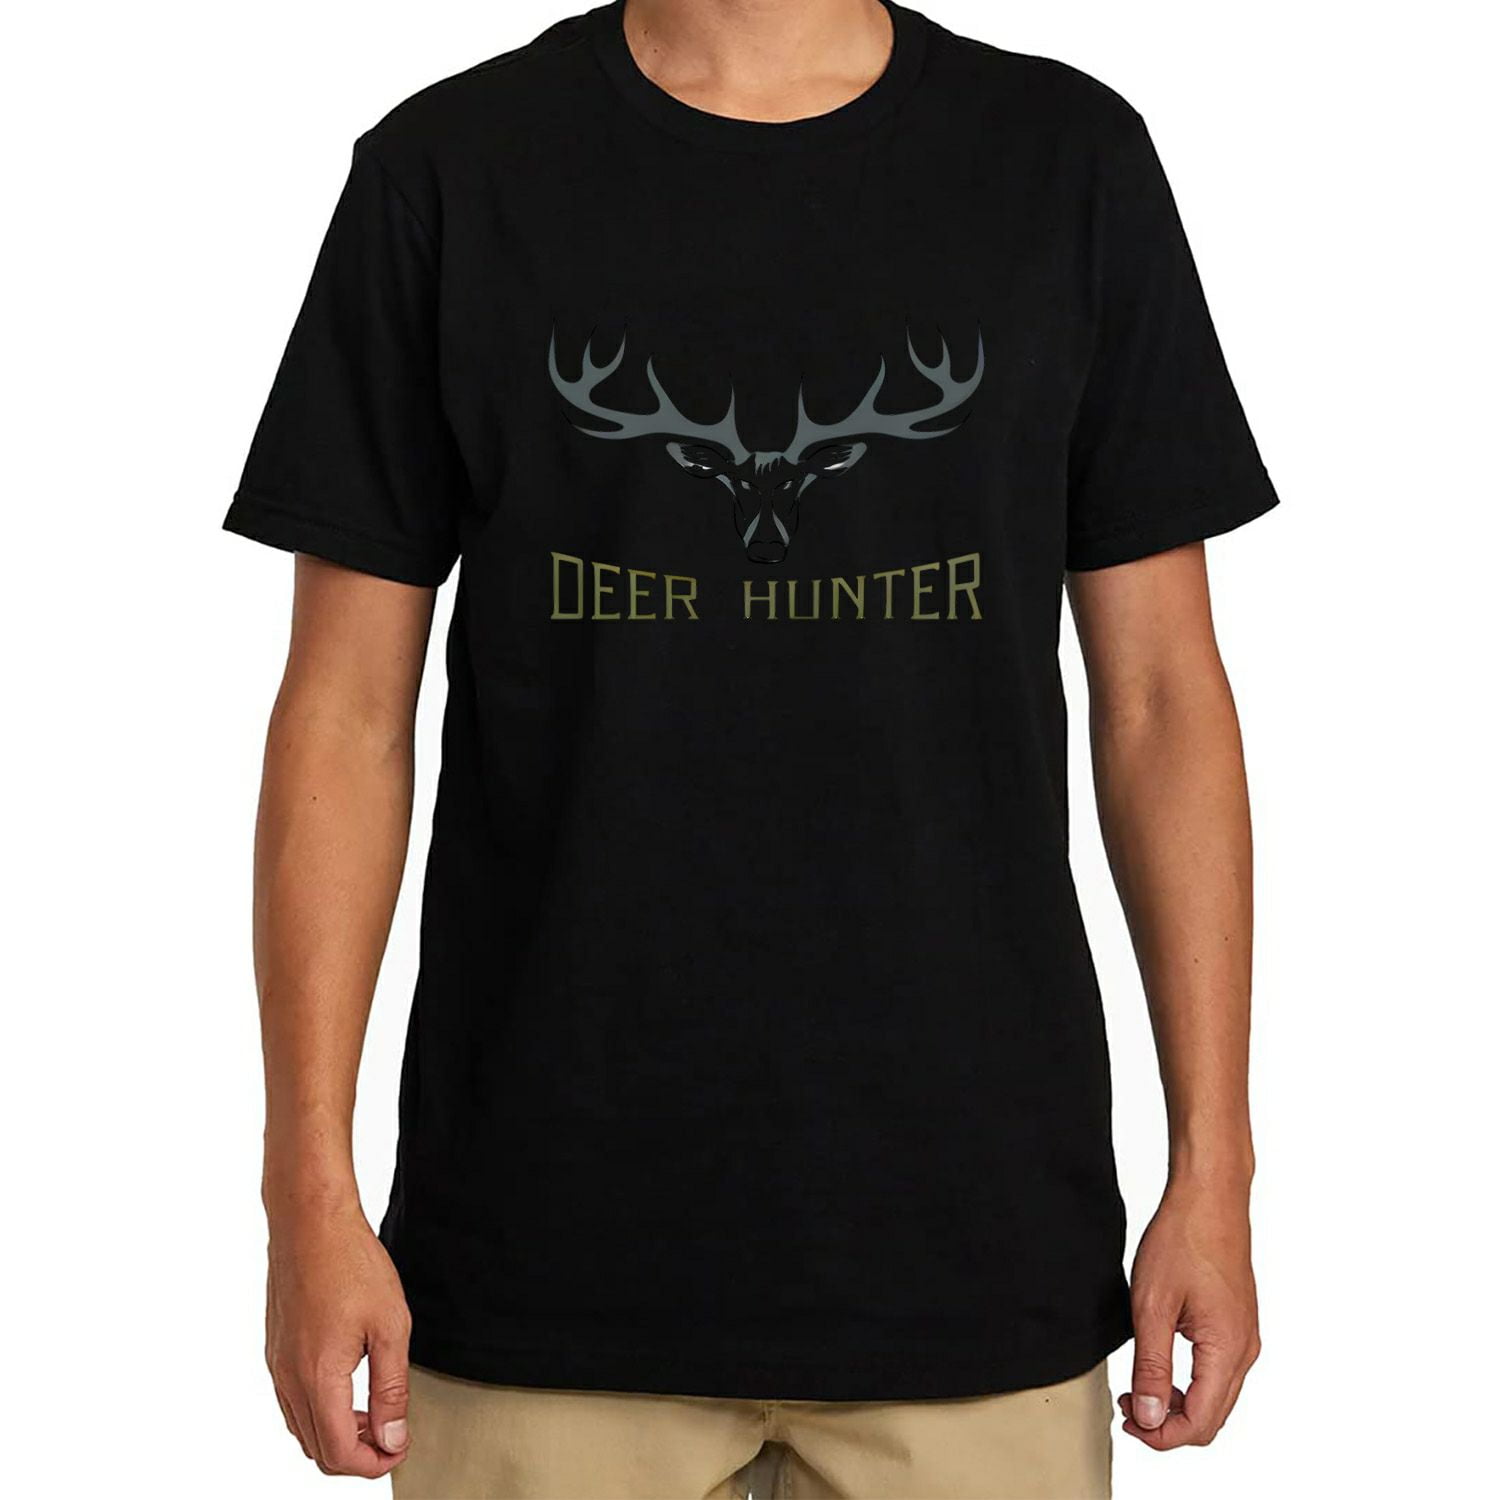 DEER HUNTER Short Sleeve Mens T Shirt Black Large - Walmart.com